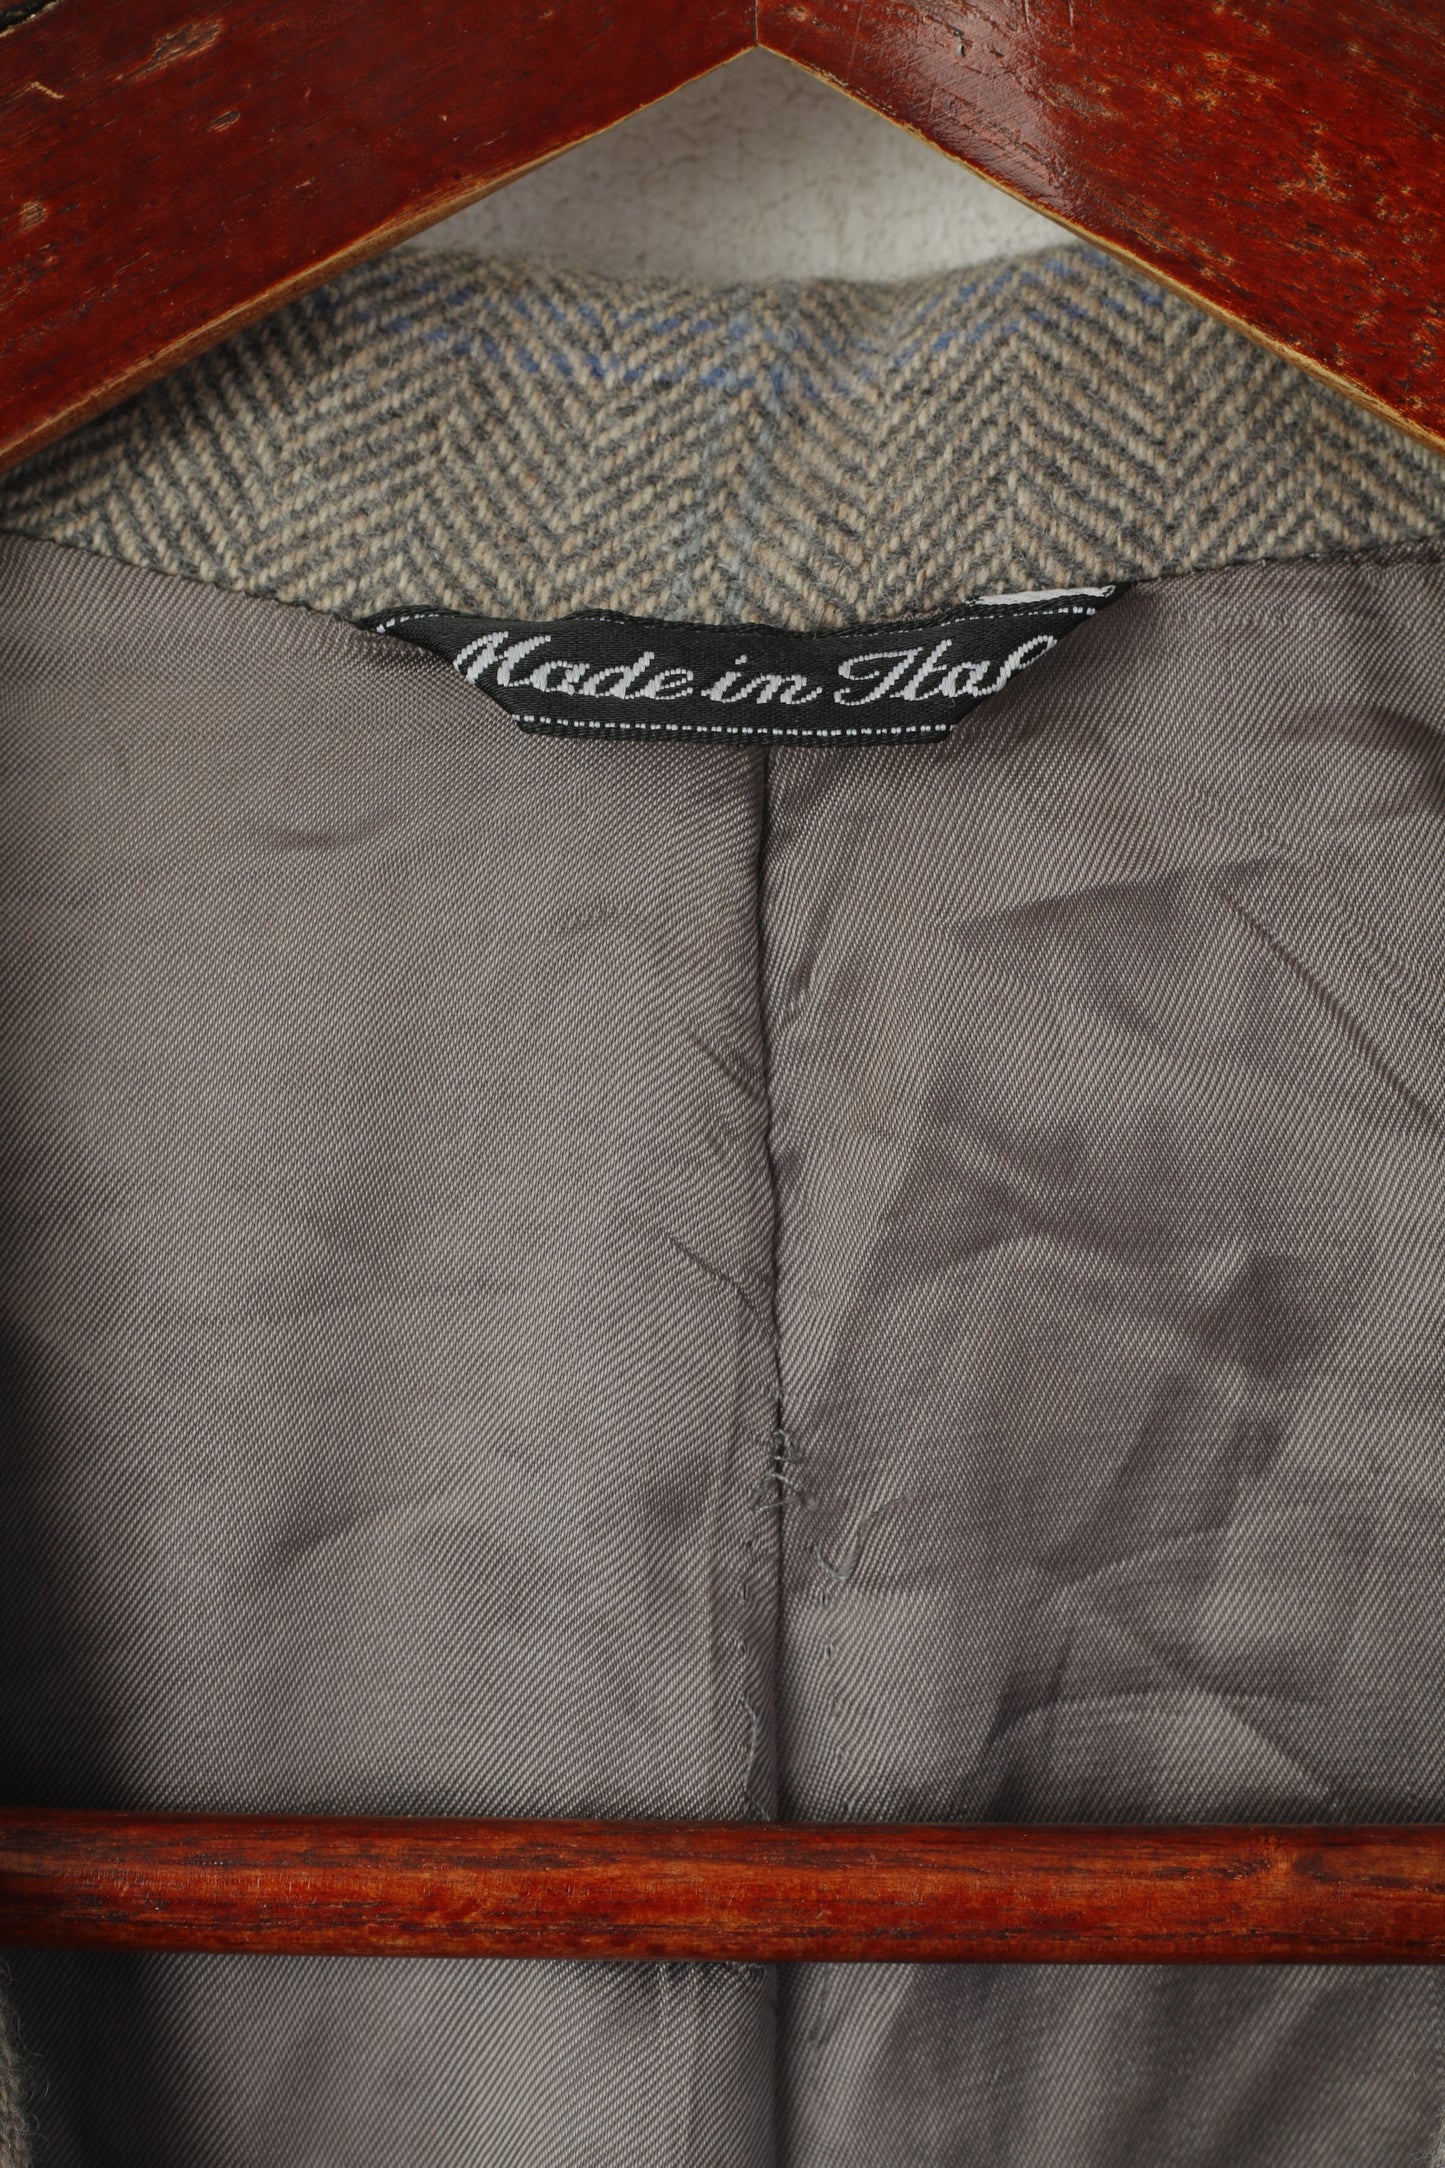 Maurizio Santini Men 48 38 Blazer Gray Wool Herringbone Made in Italy Jacket